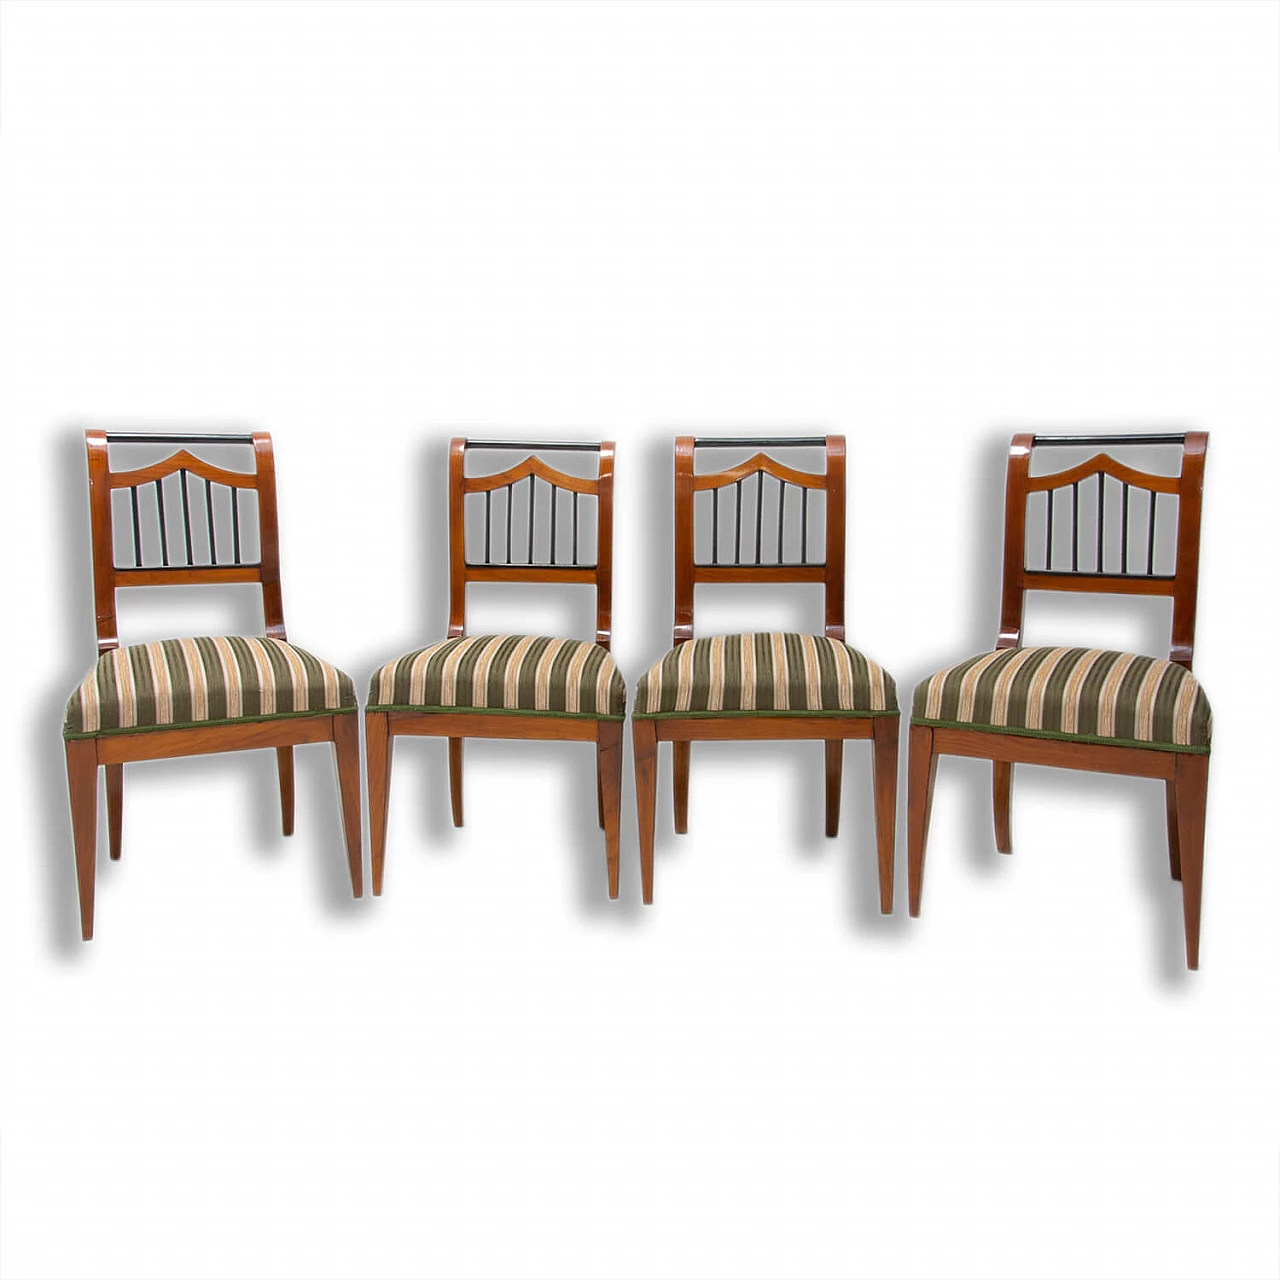 4 Austrian Biedermeier dining chairs, mid-19th century 1380661